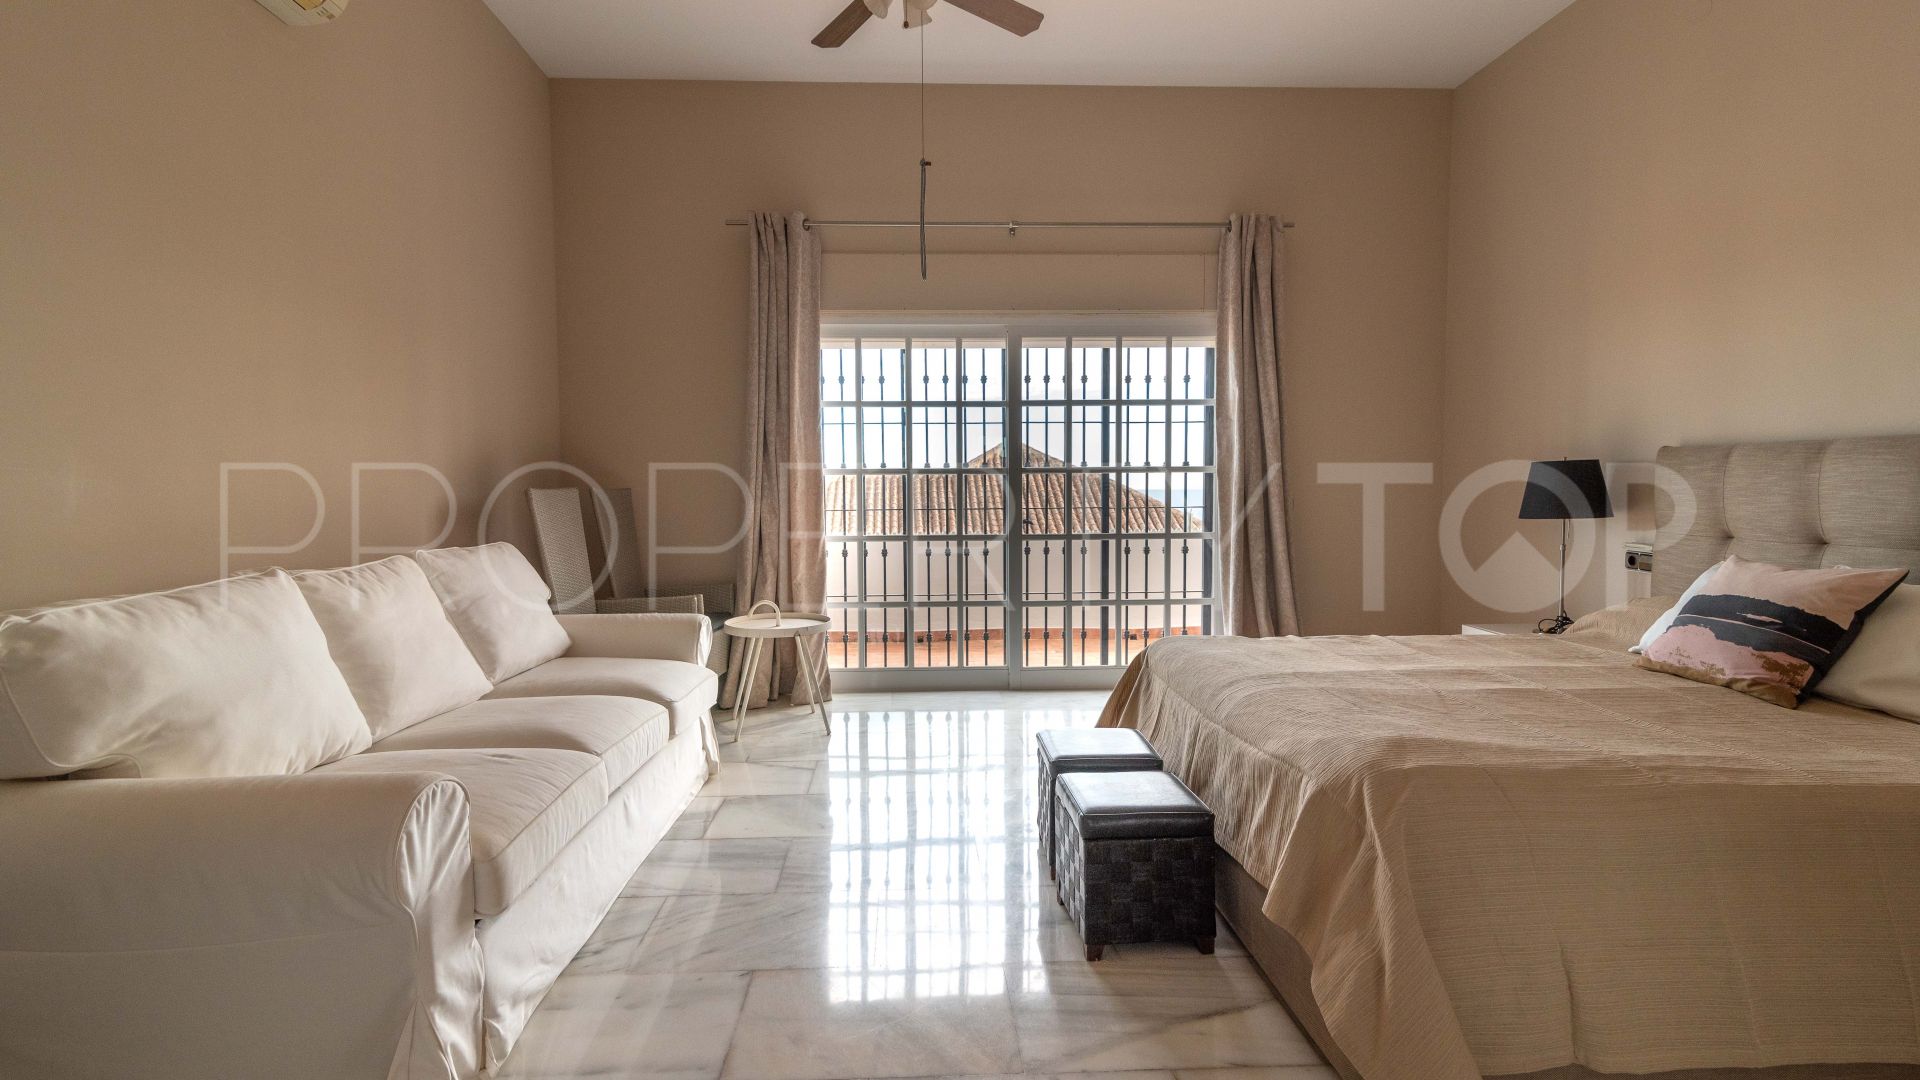 House with 3 bedrooms for sale in Cala de Mijas